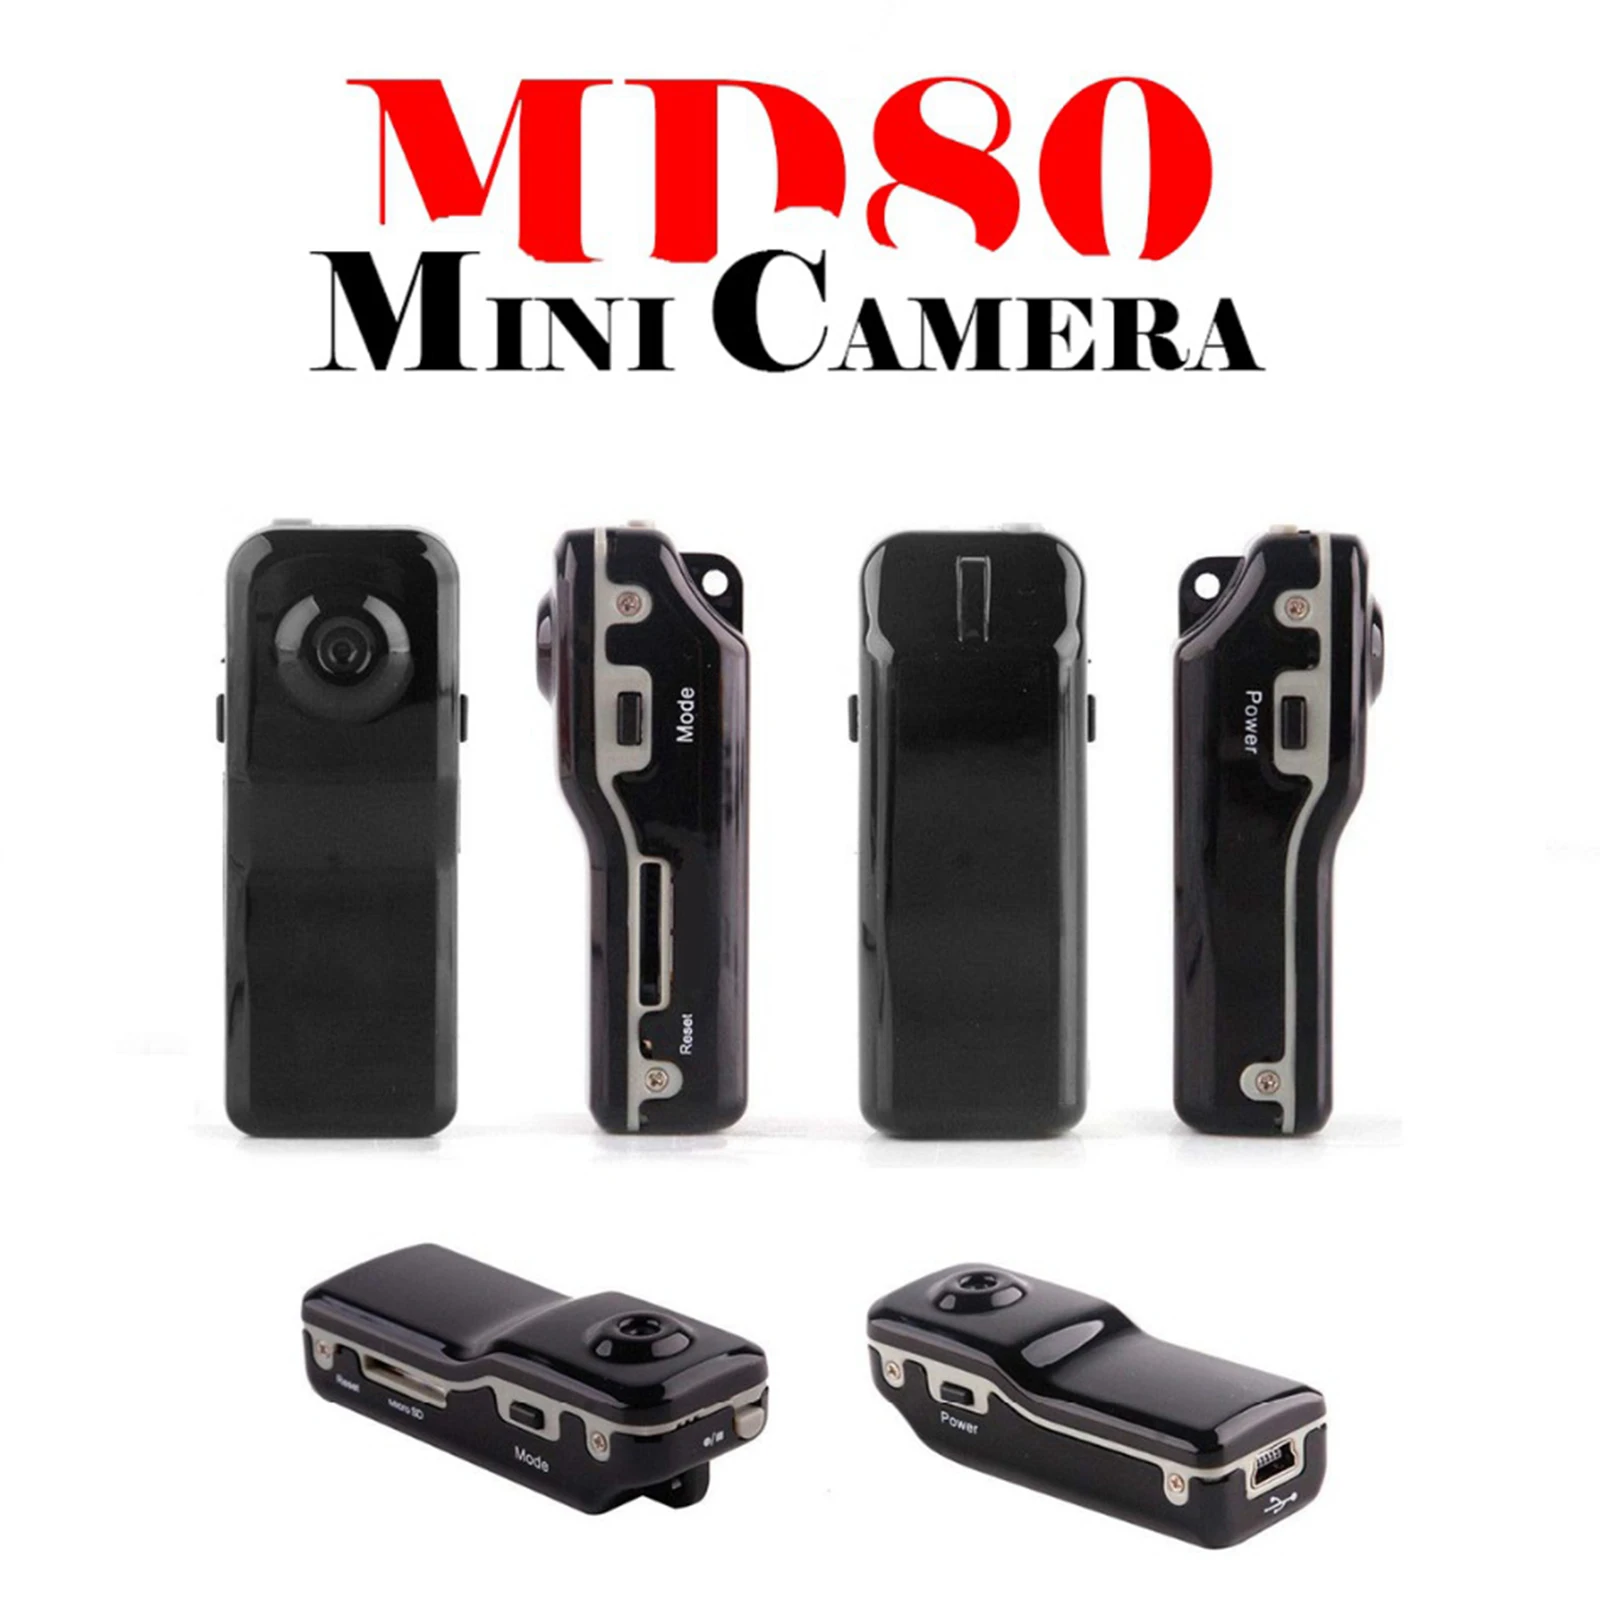 MD80 Portable Hidden Mini DV DVR Sports Camera HD 480P Video Audio Recorder Clip Outdoor Security for Bike Motorbike Pocket Cam